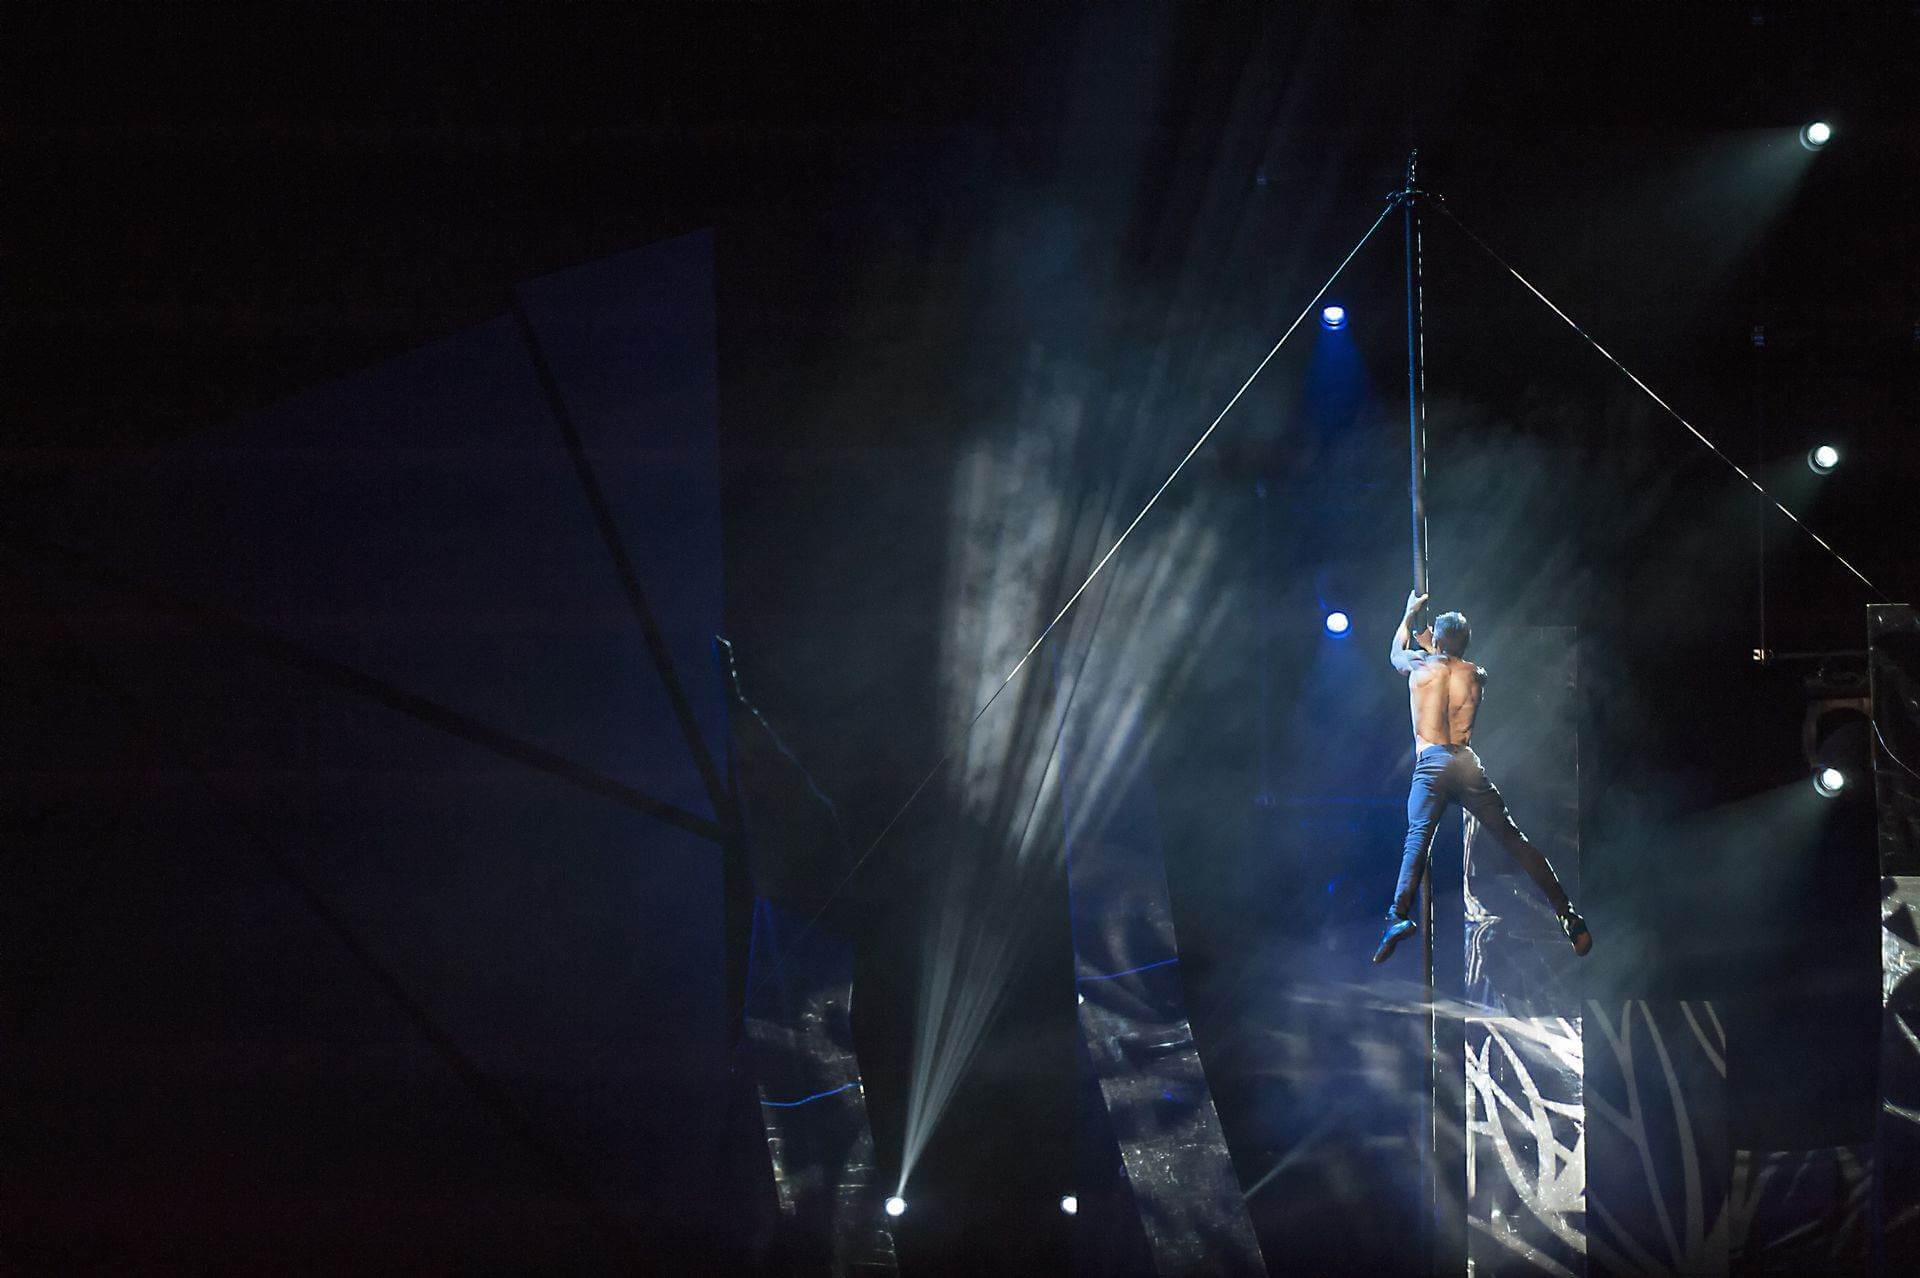 Scalada - Vision by Cirque du Soleil 2016: Vertical Bar with acrobatics